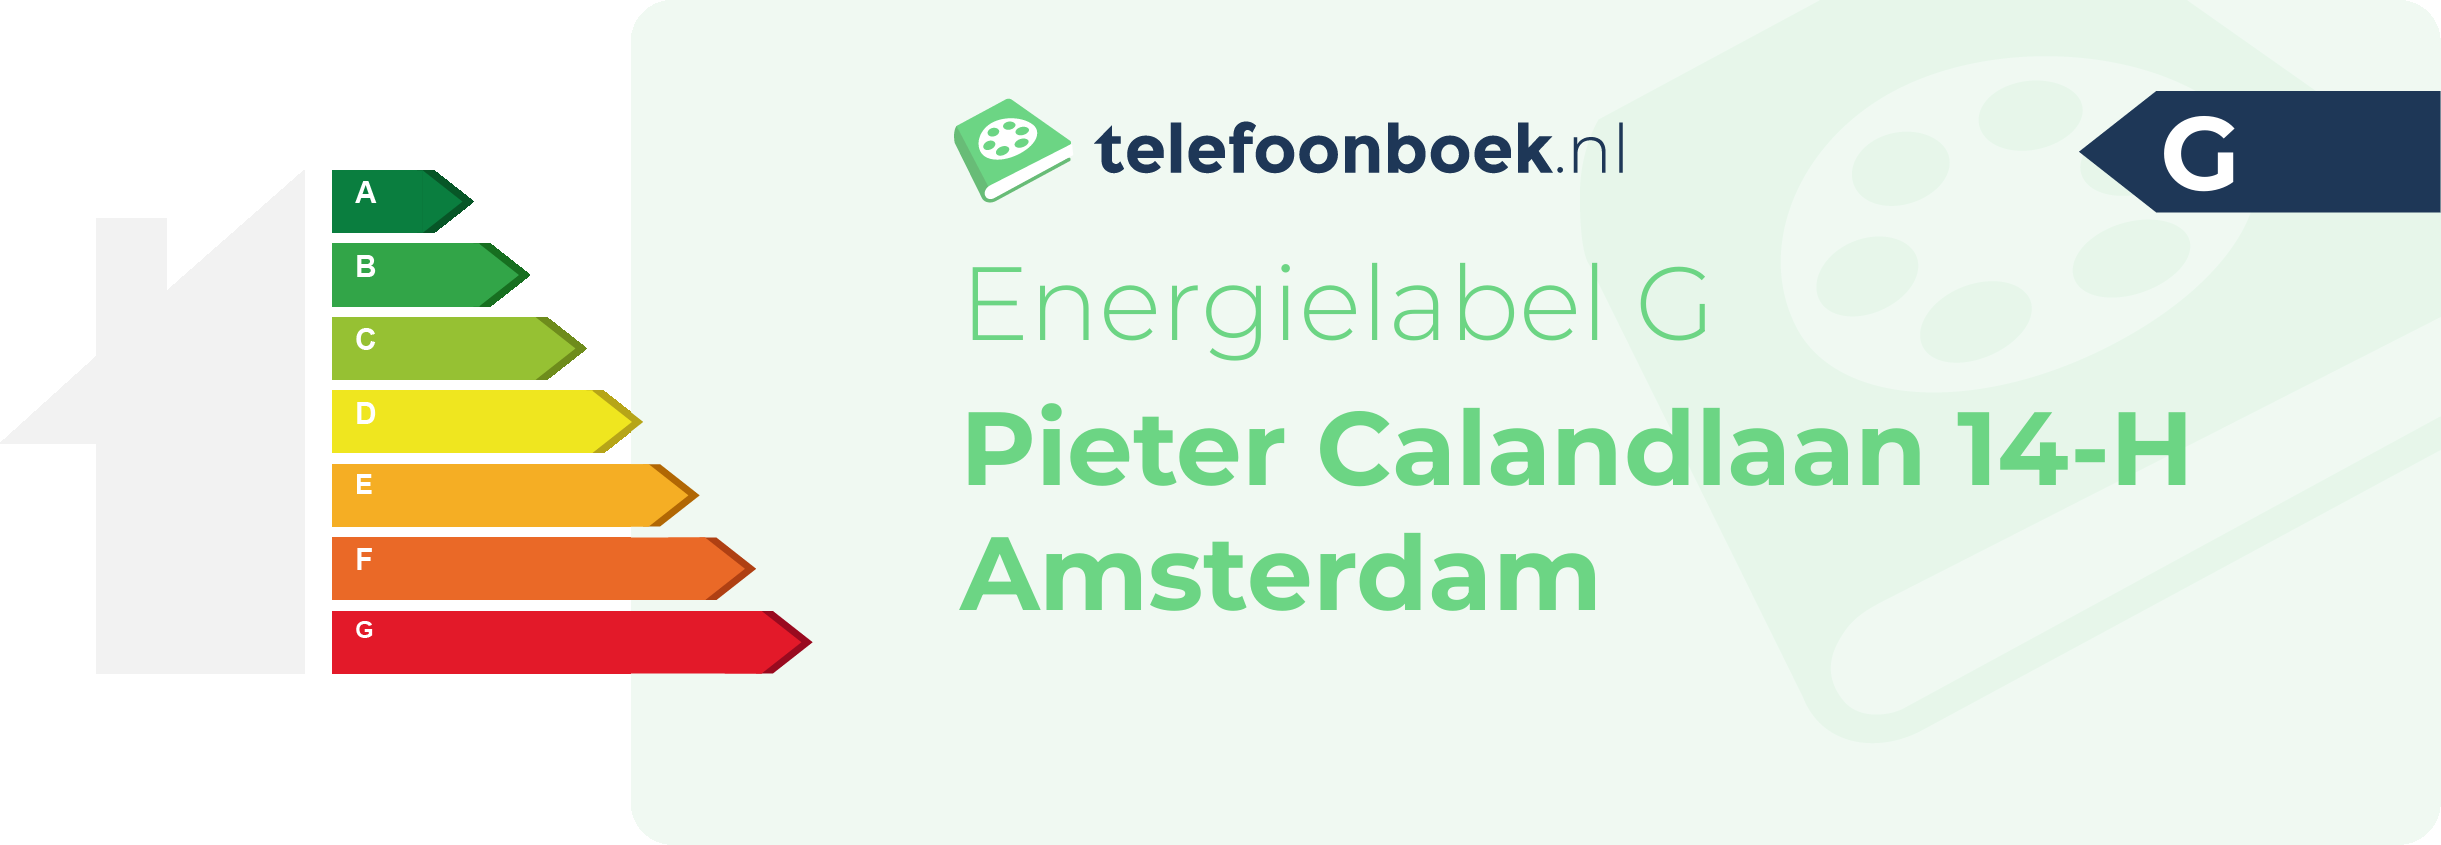 Energielabel Pieter Calandlaan 14-H Amsterdam